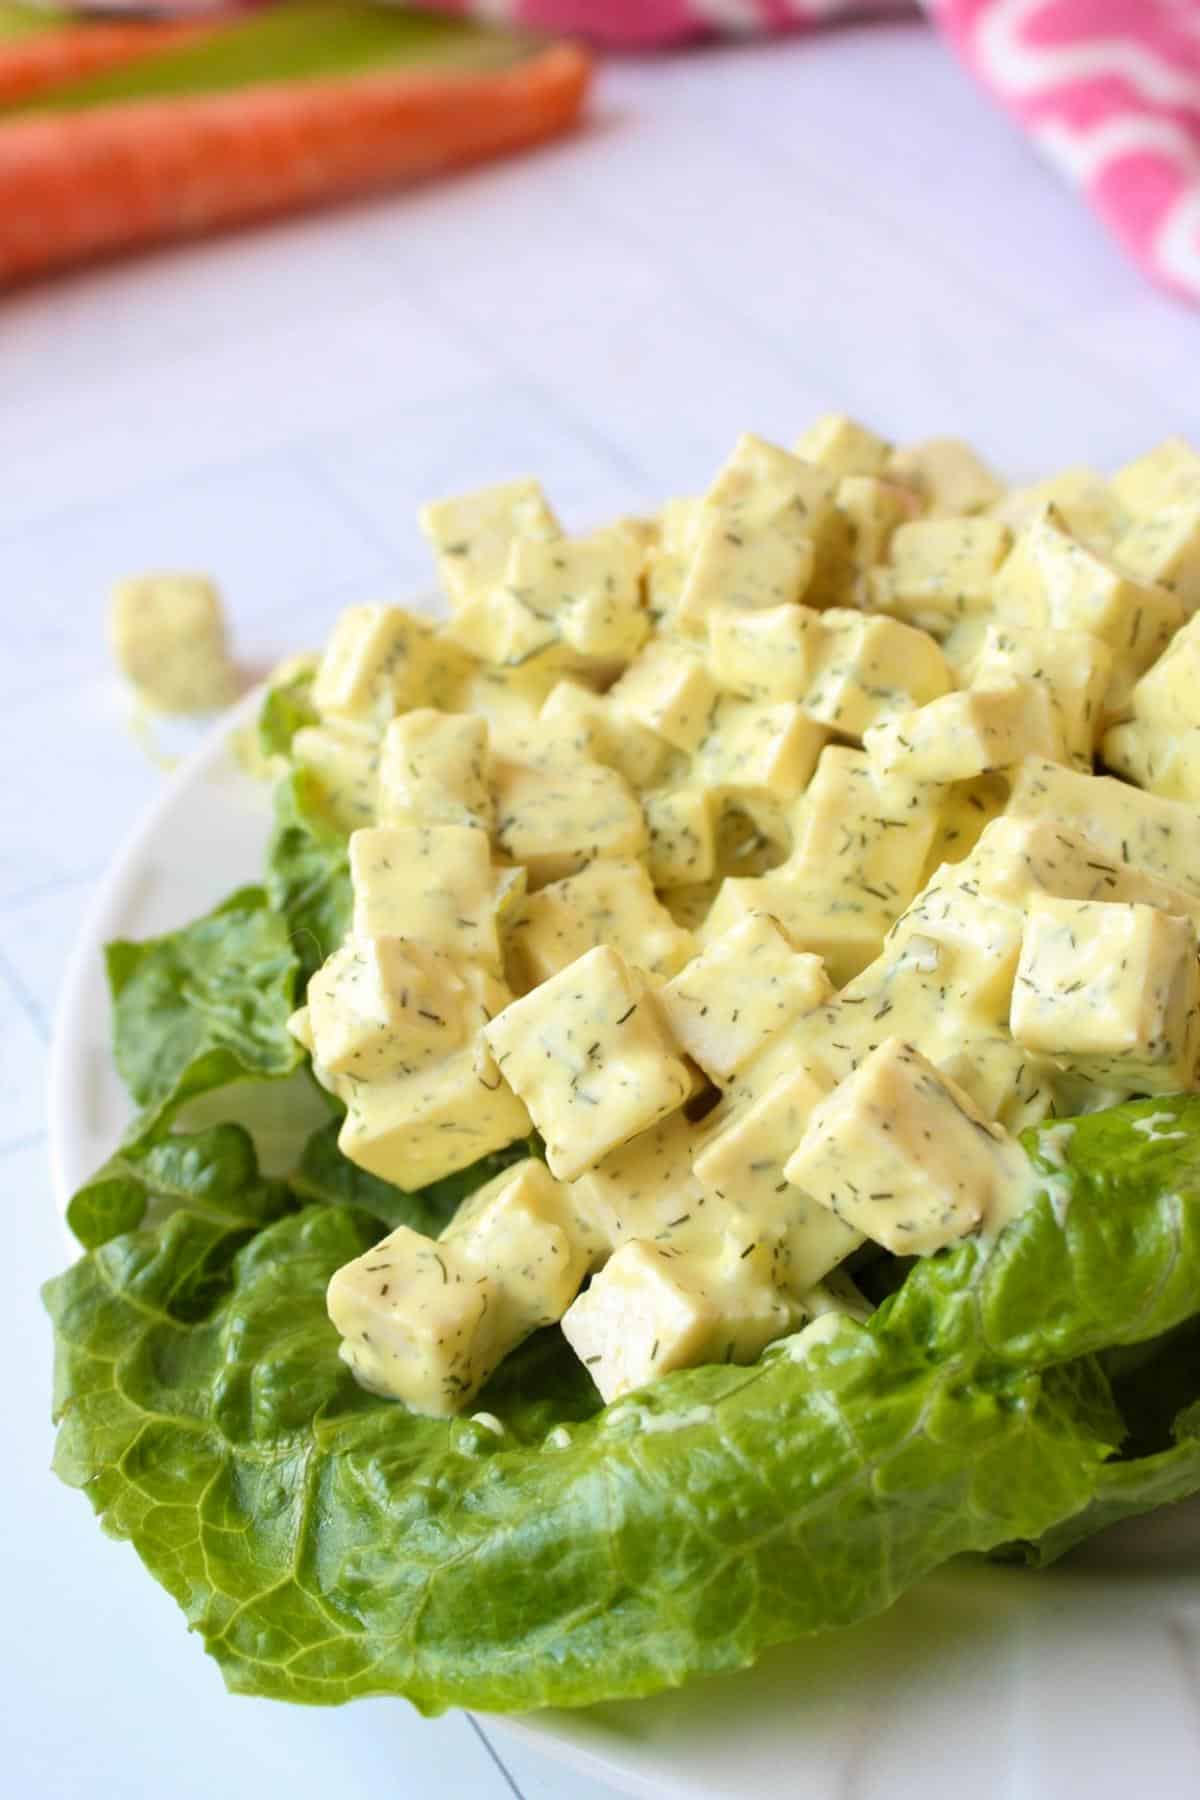 Vegan egg salad made with tofu on a romaine lettuce leaf